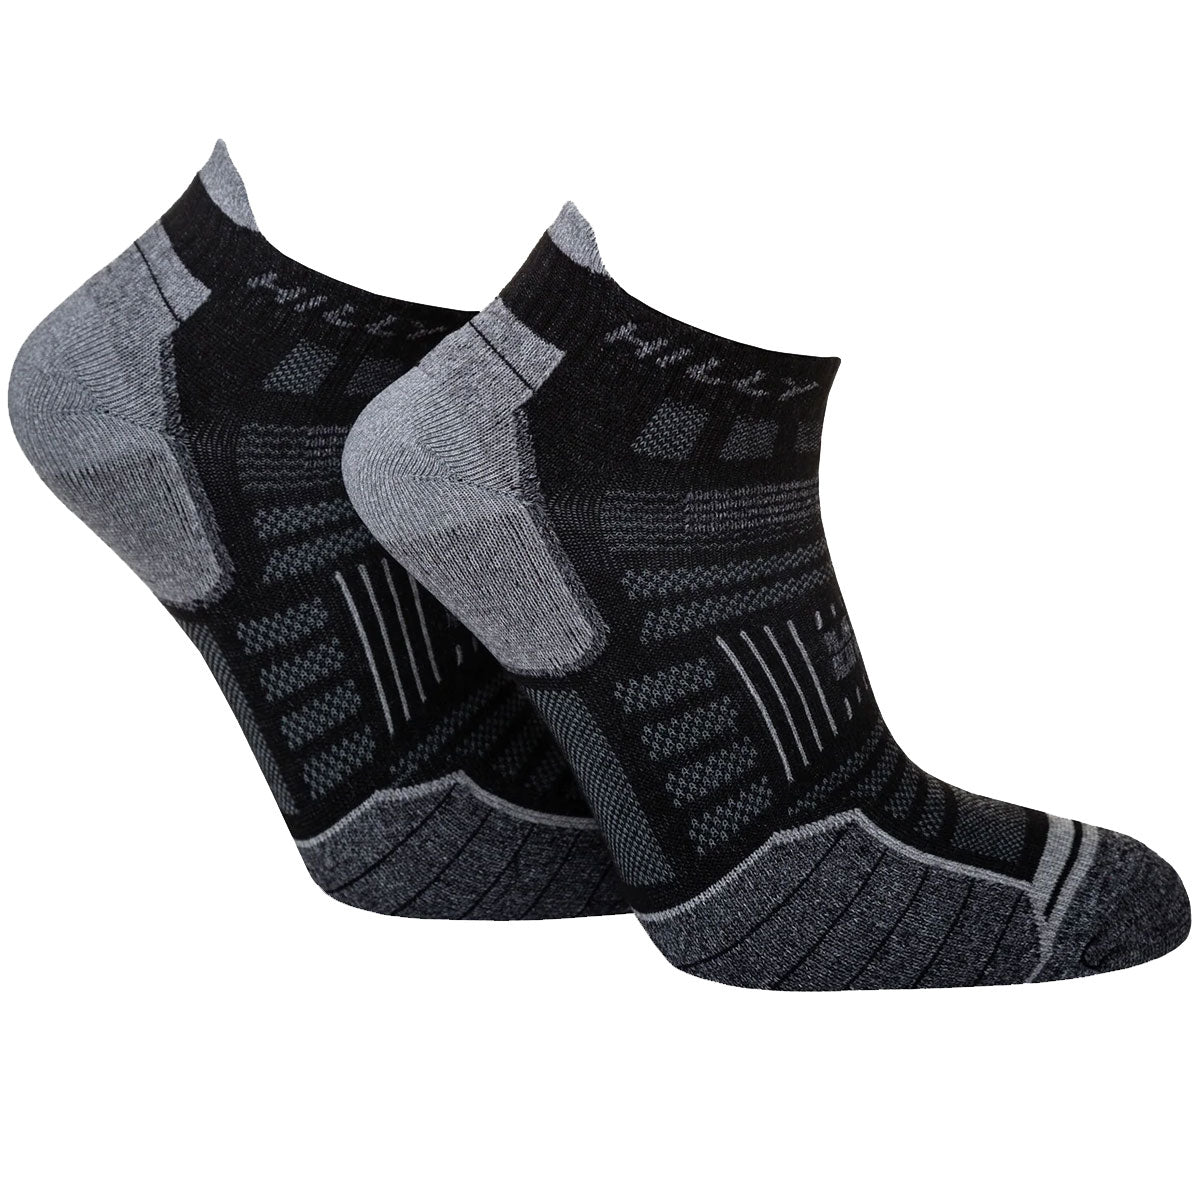 Hilly Twin Skin Socklet Min Socks - Mens - Black/Grey Marl